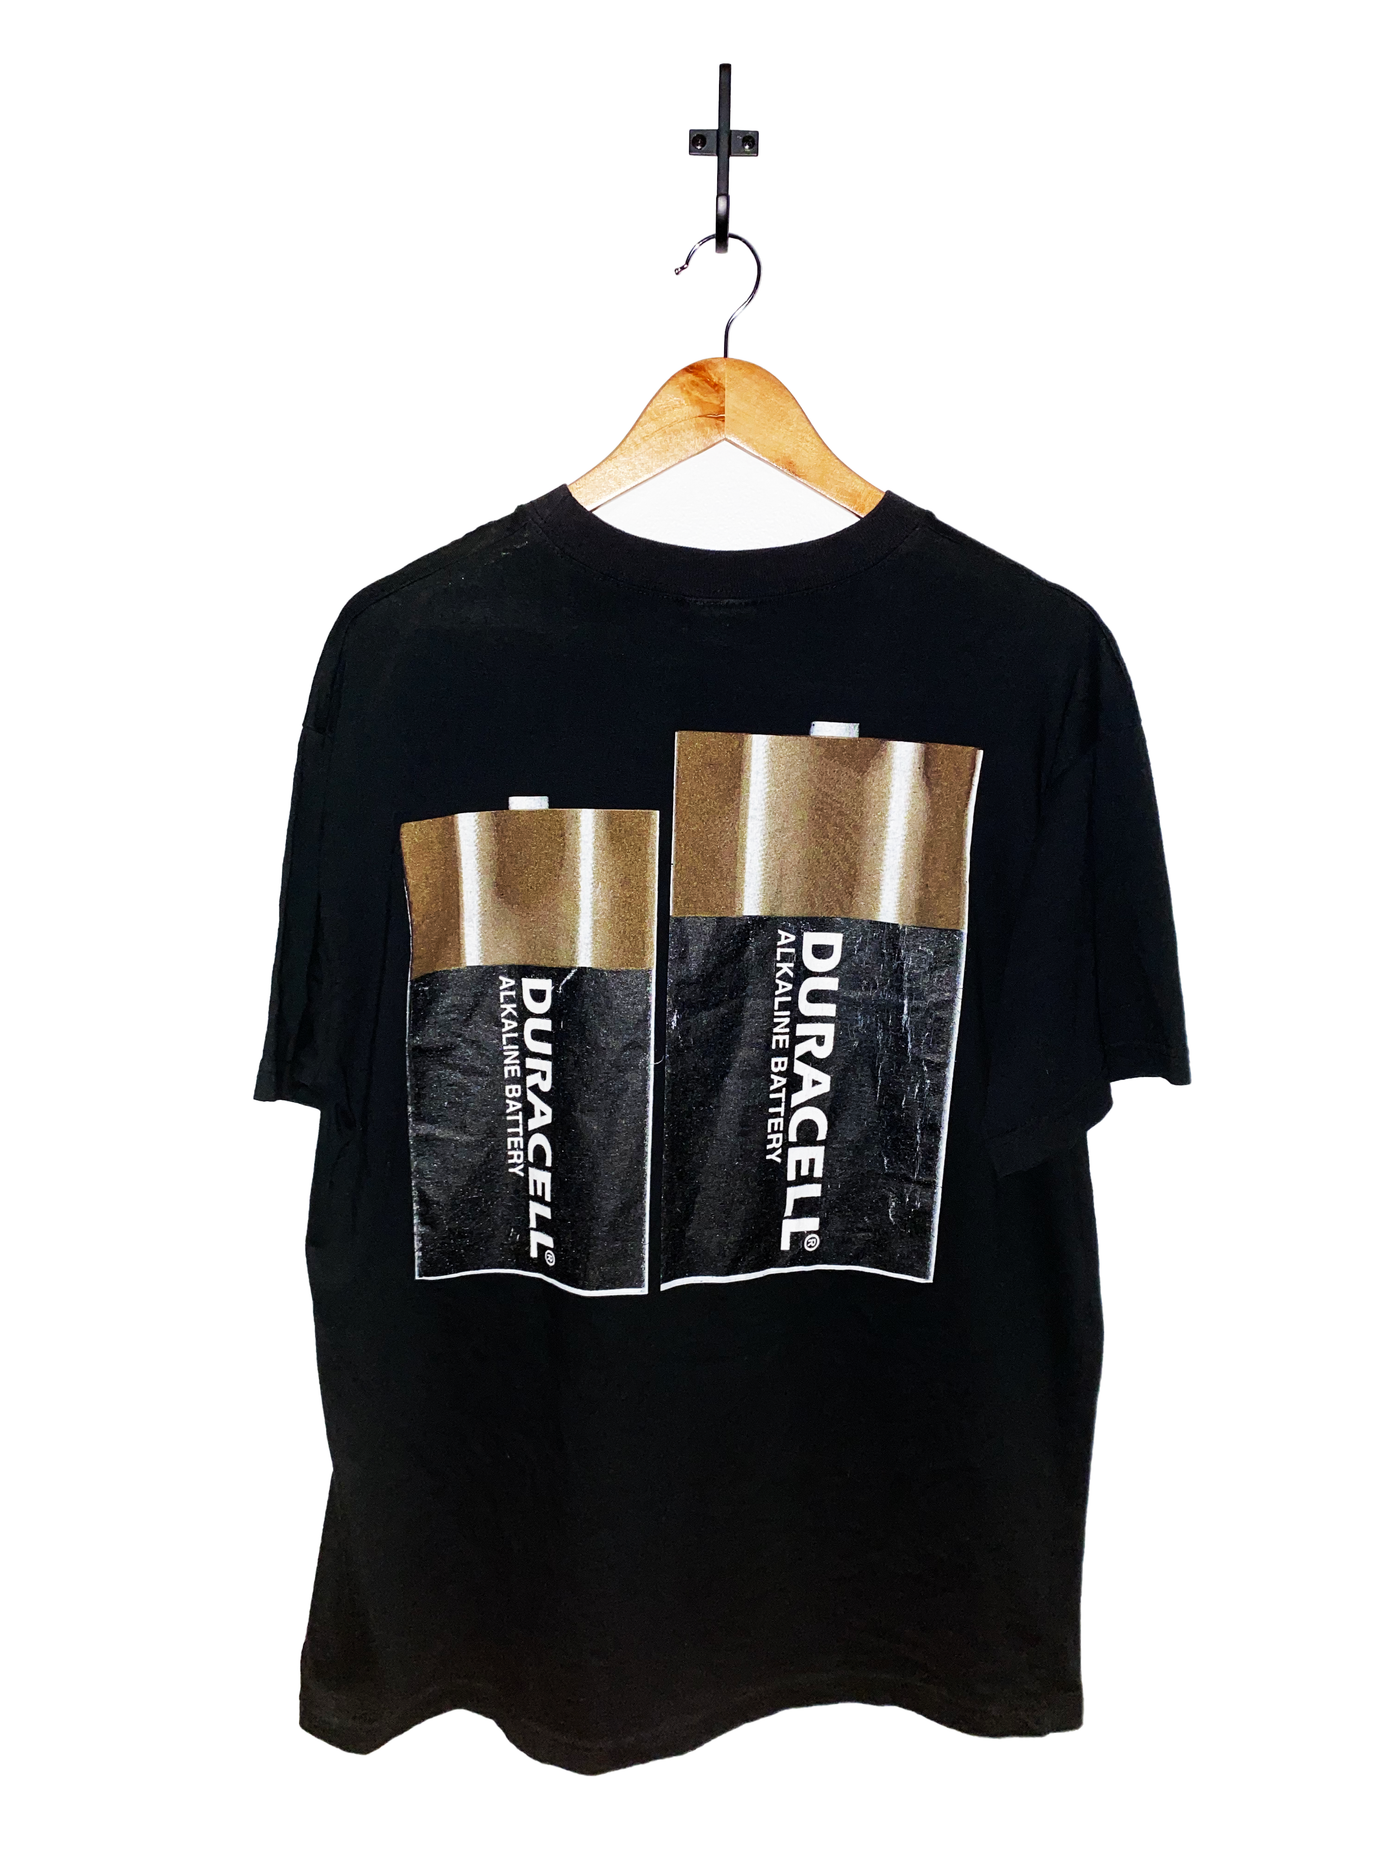 Vintage 1995 ‘Generation Gap’ Duracell Battery Promo T-Shirt